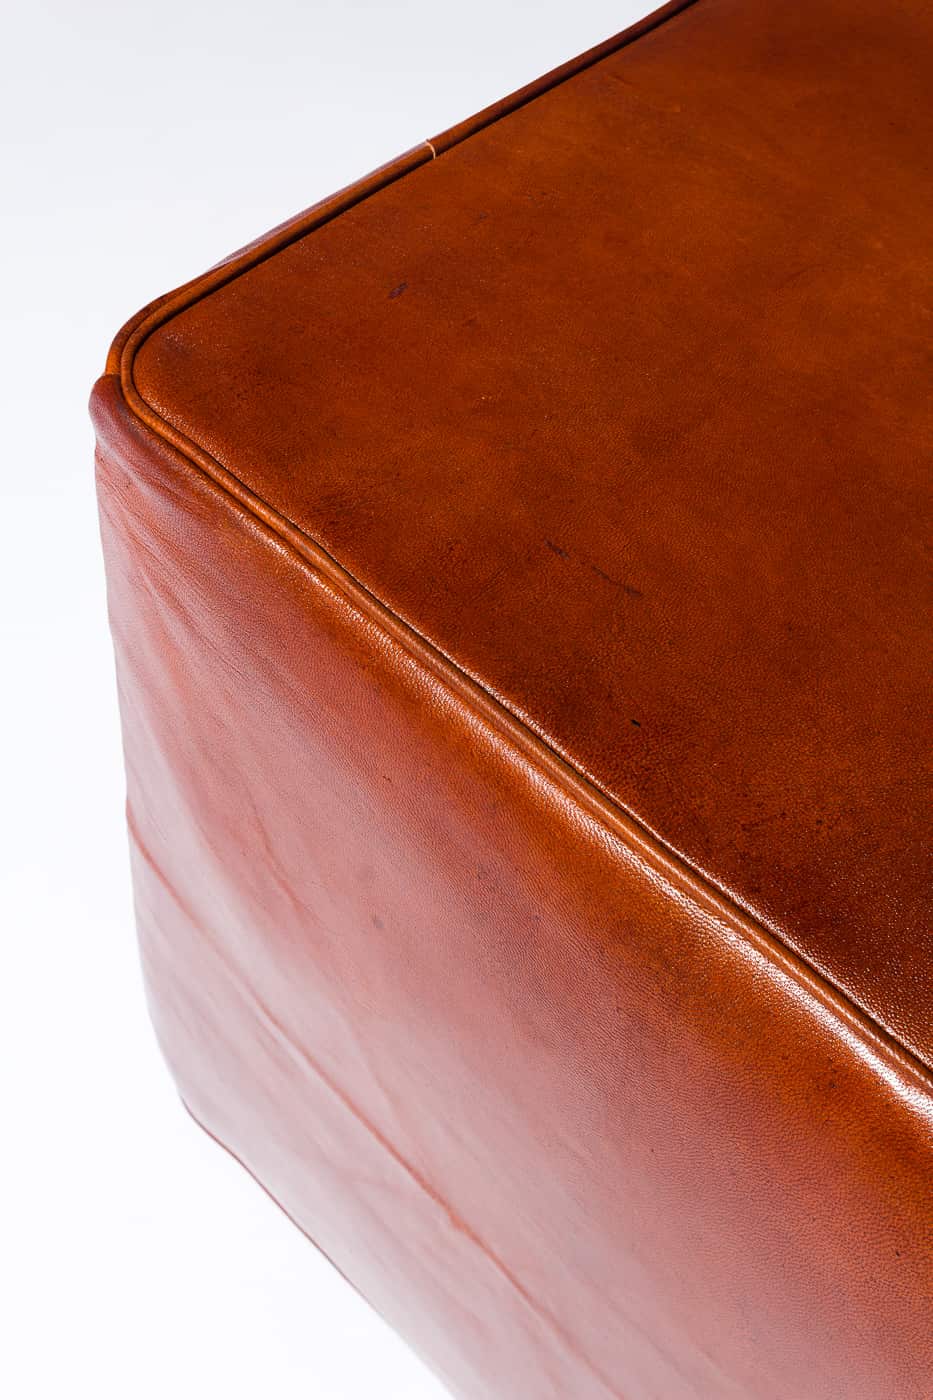 SG052 Cognac Leather Ottoman Prop Rental | ACME Brooklyn